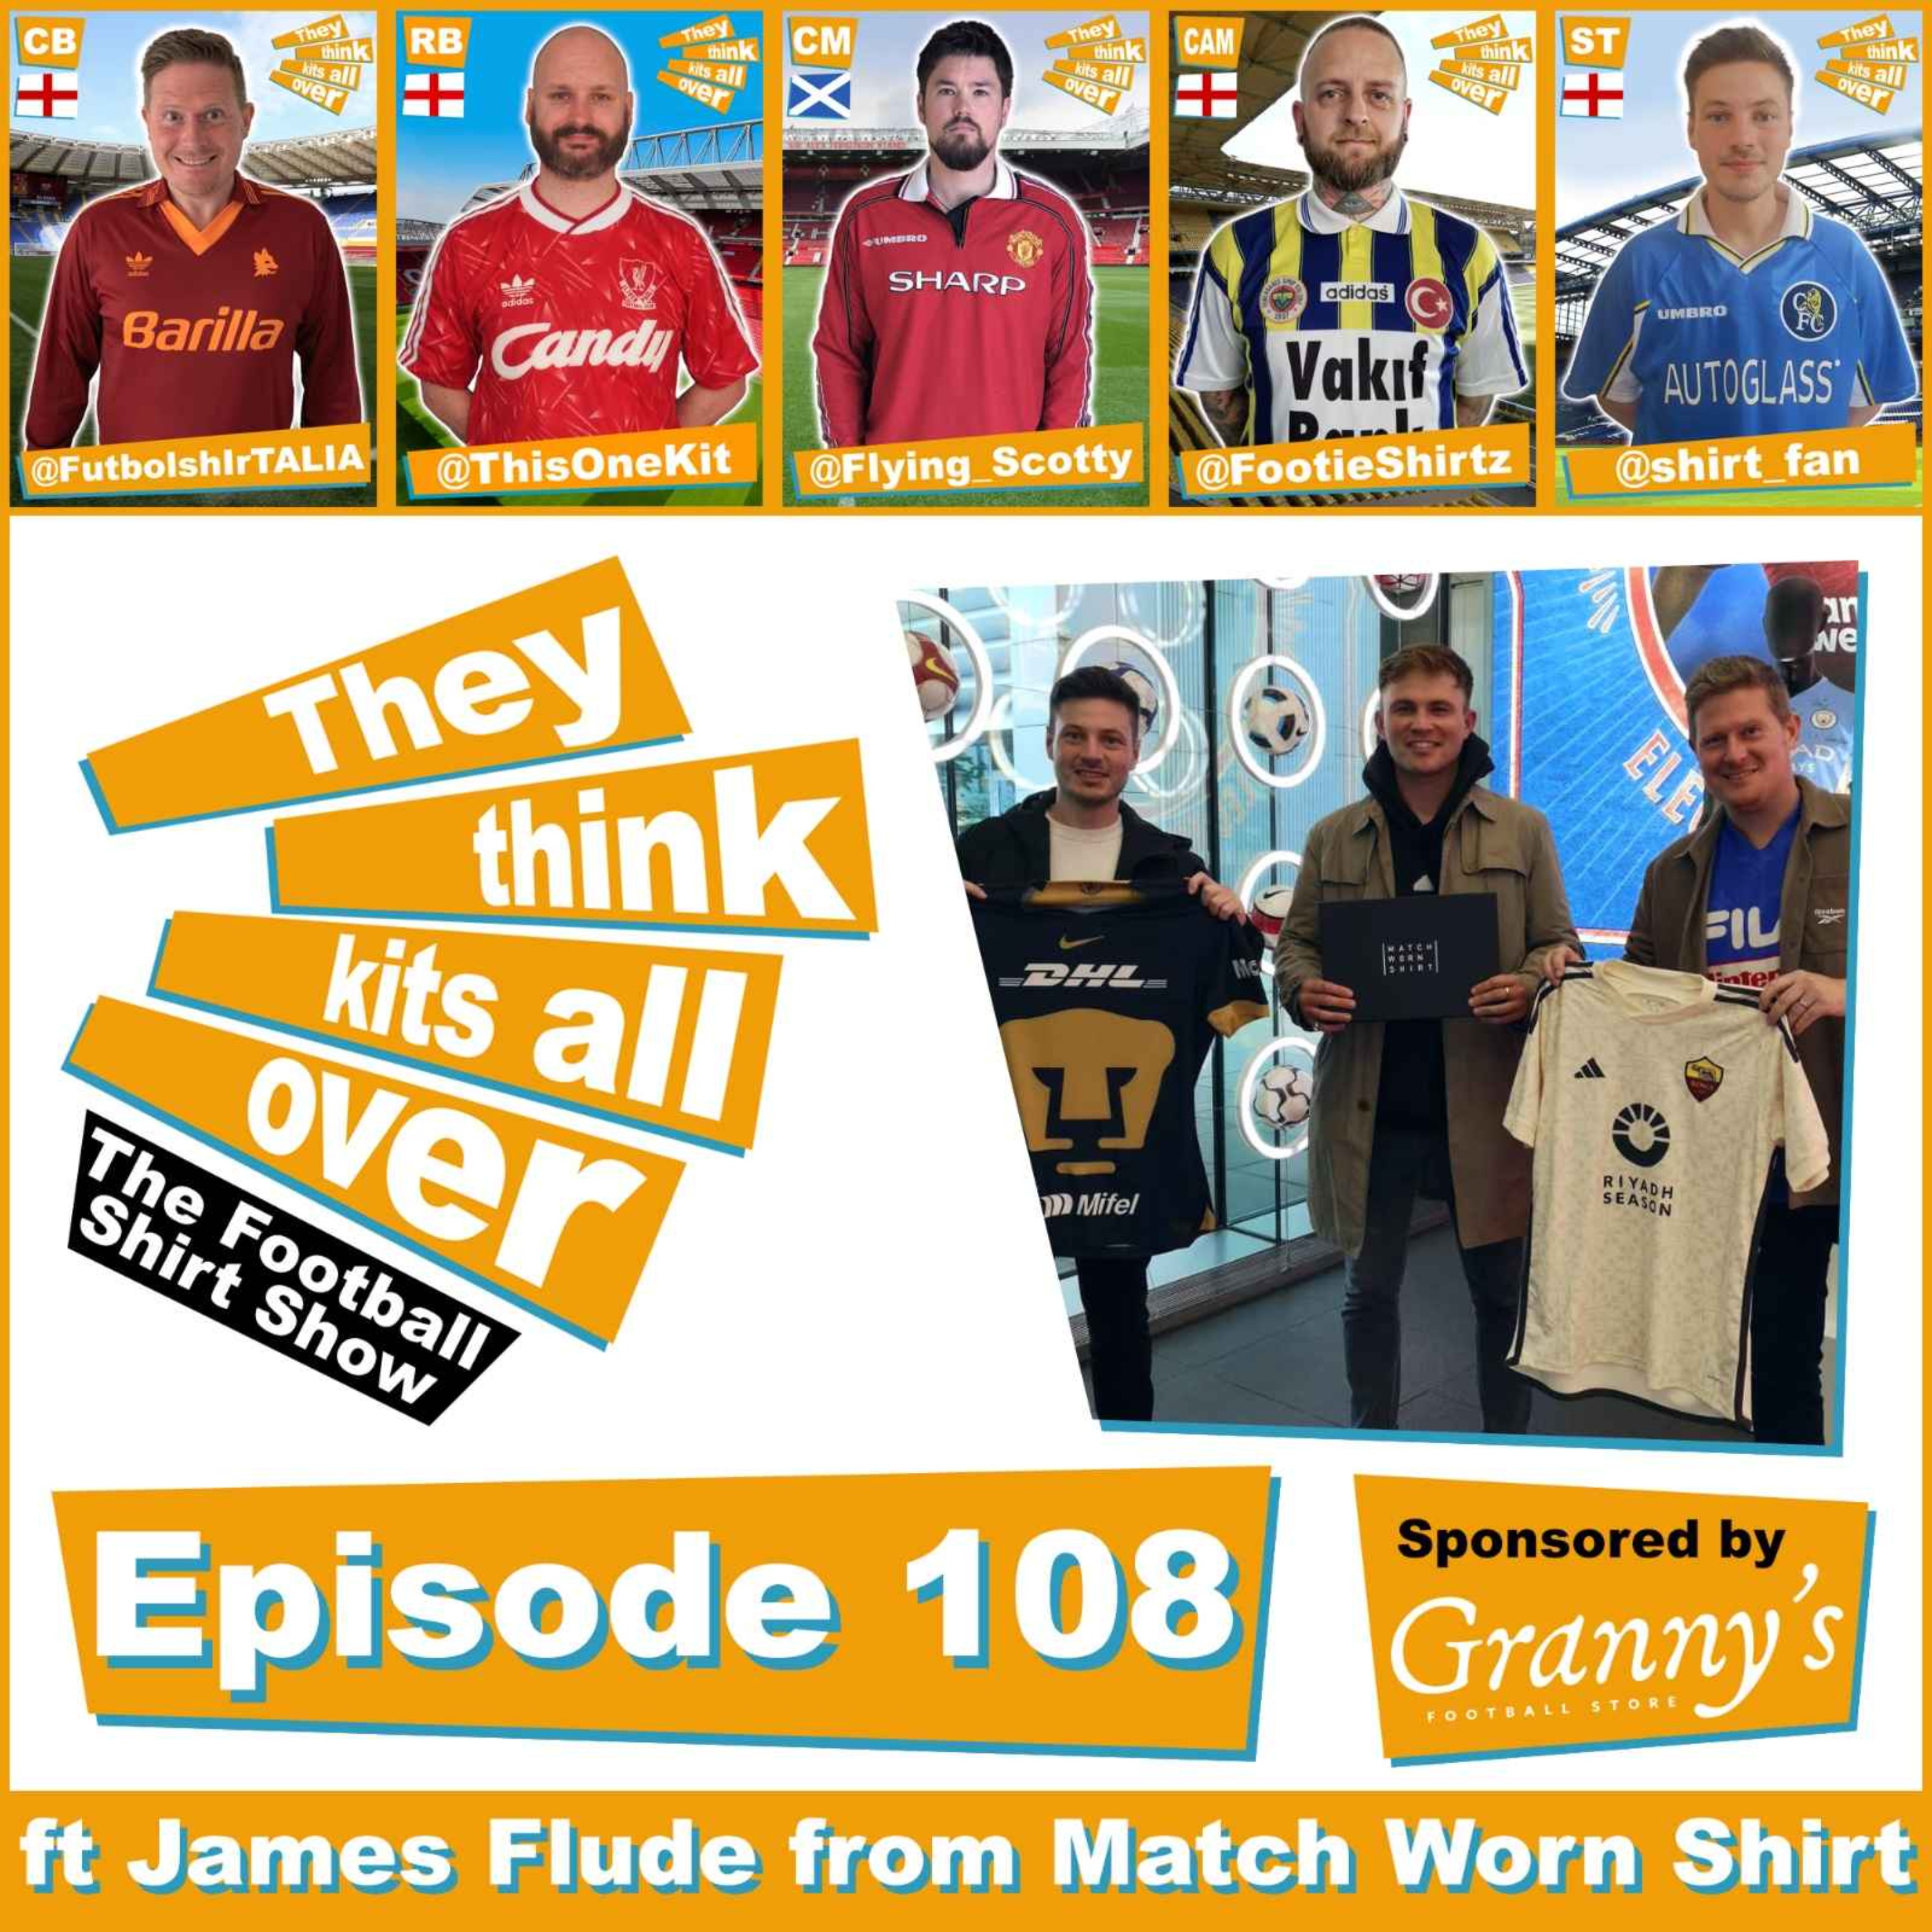 Episode 108 - MatchWornShirt ft James Flude